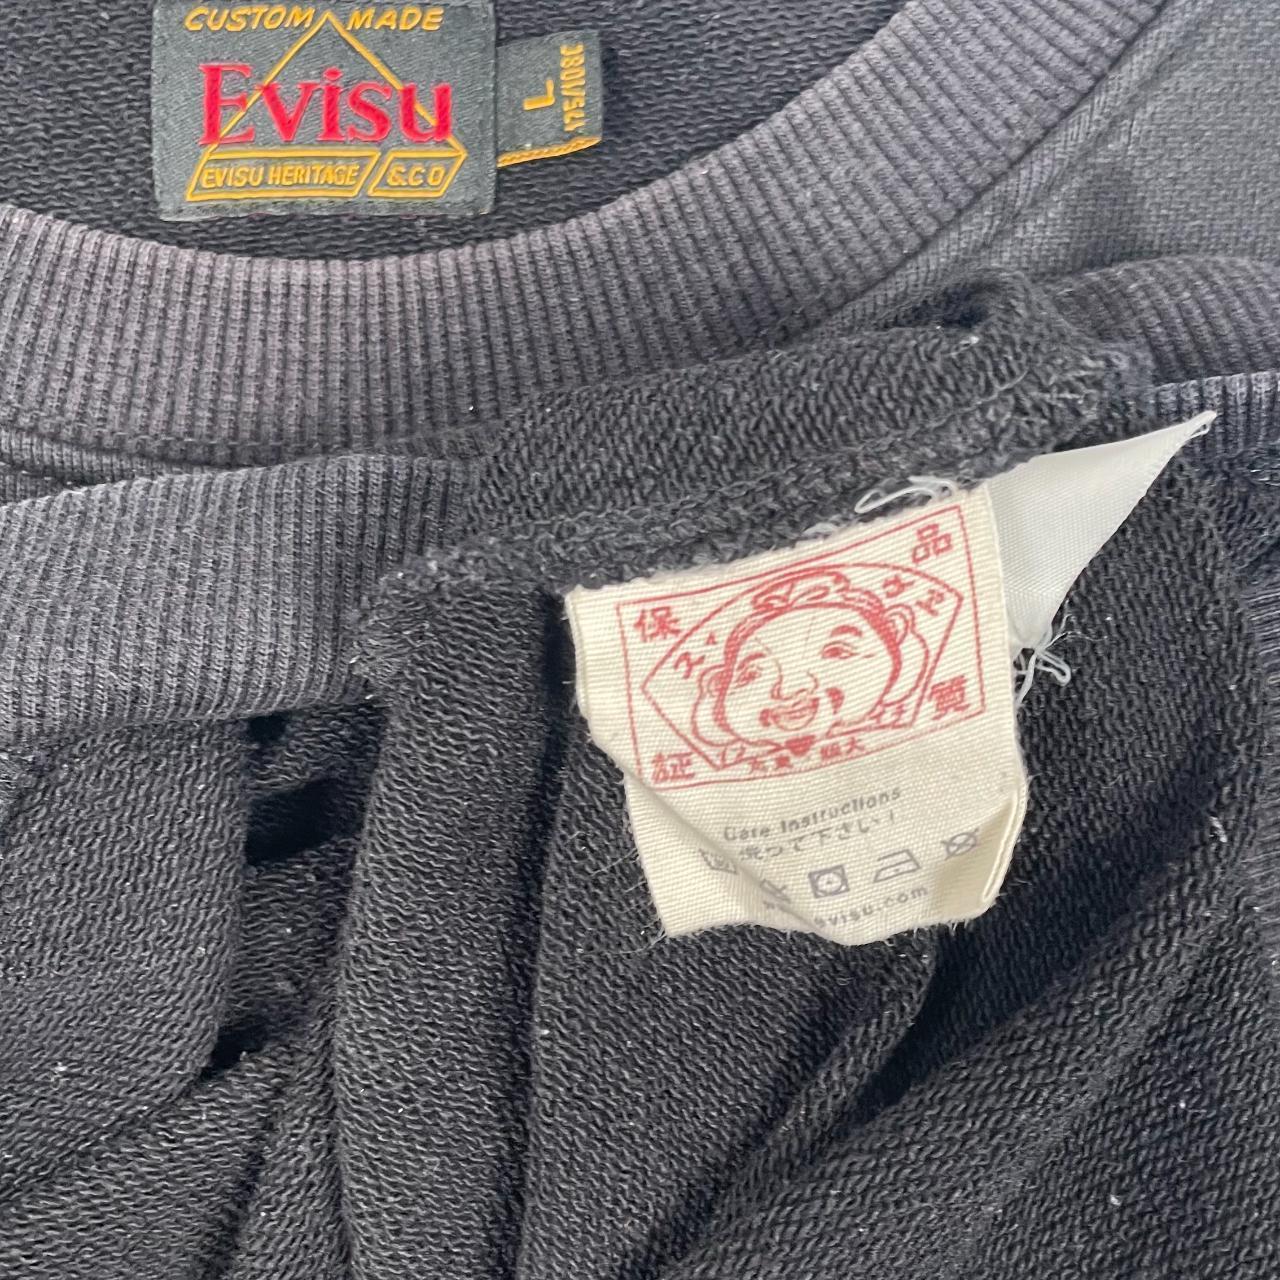 Authentic Vintage Evisu Sweatshirt  (L)